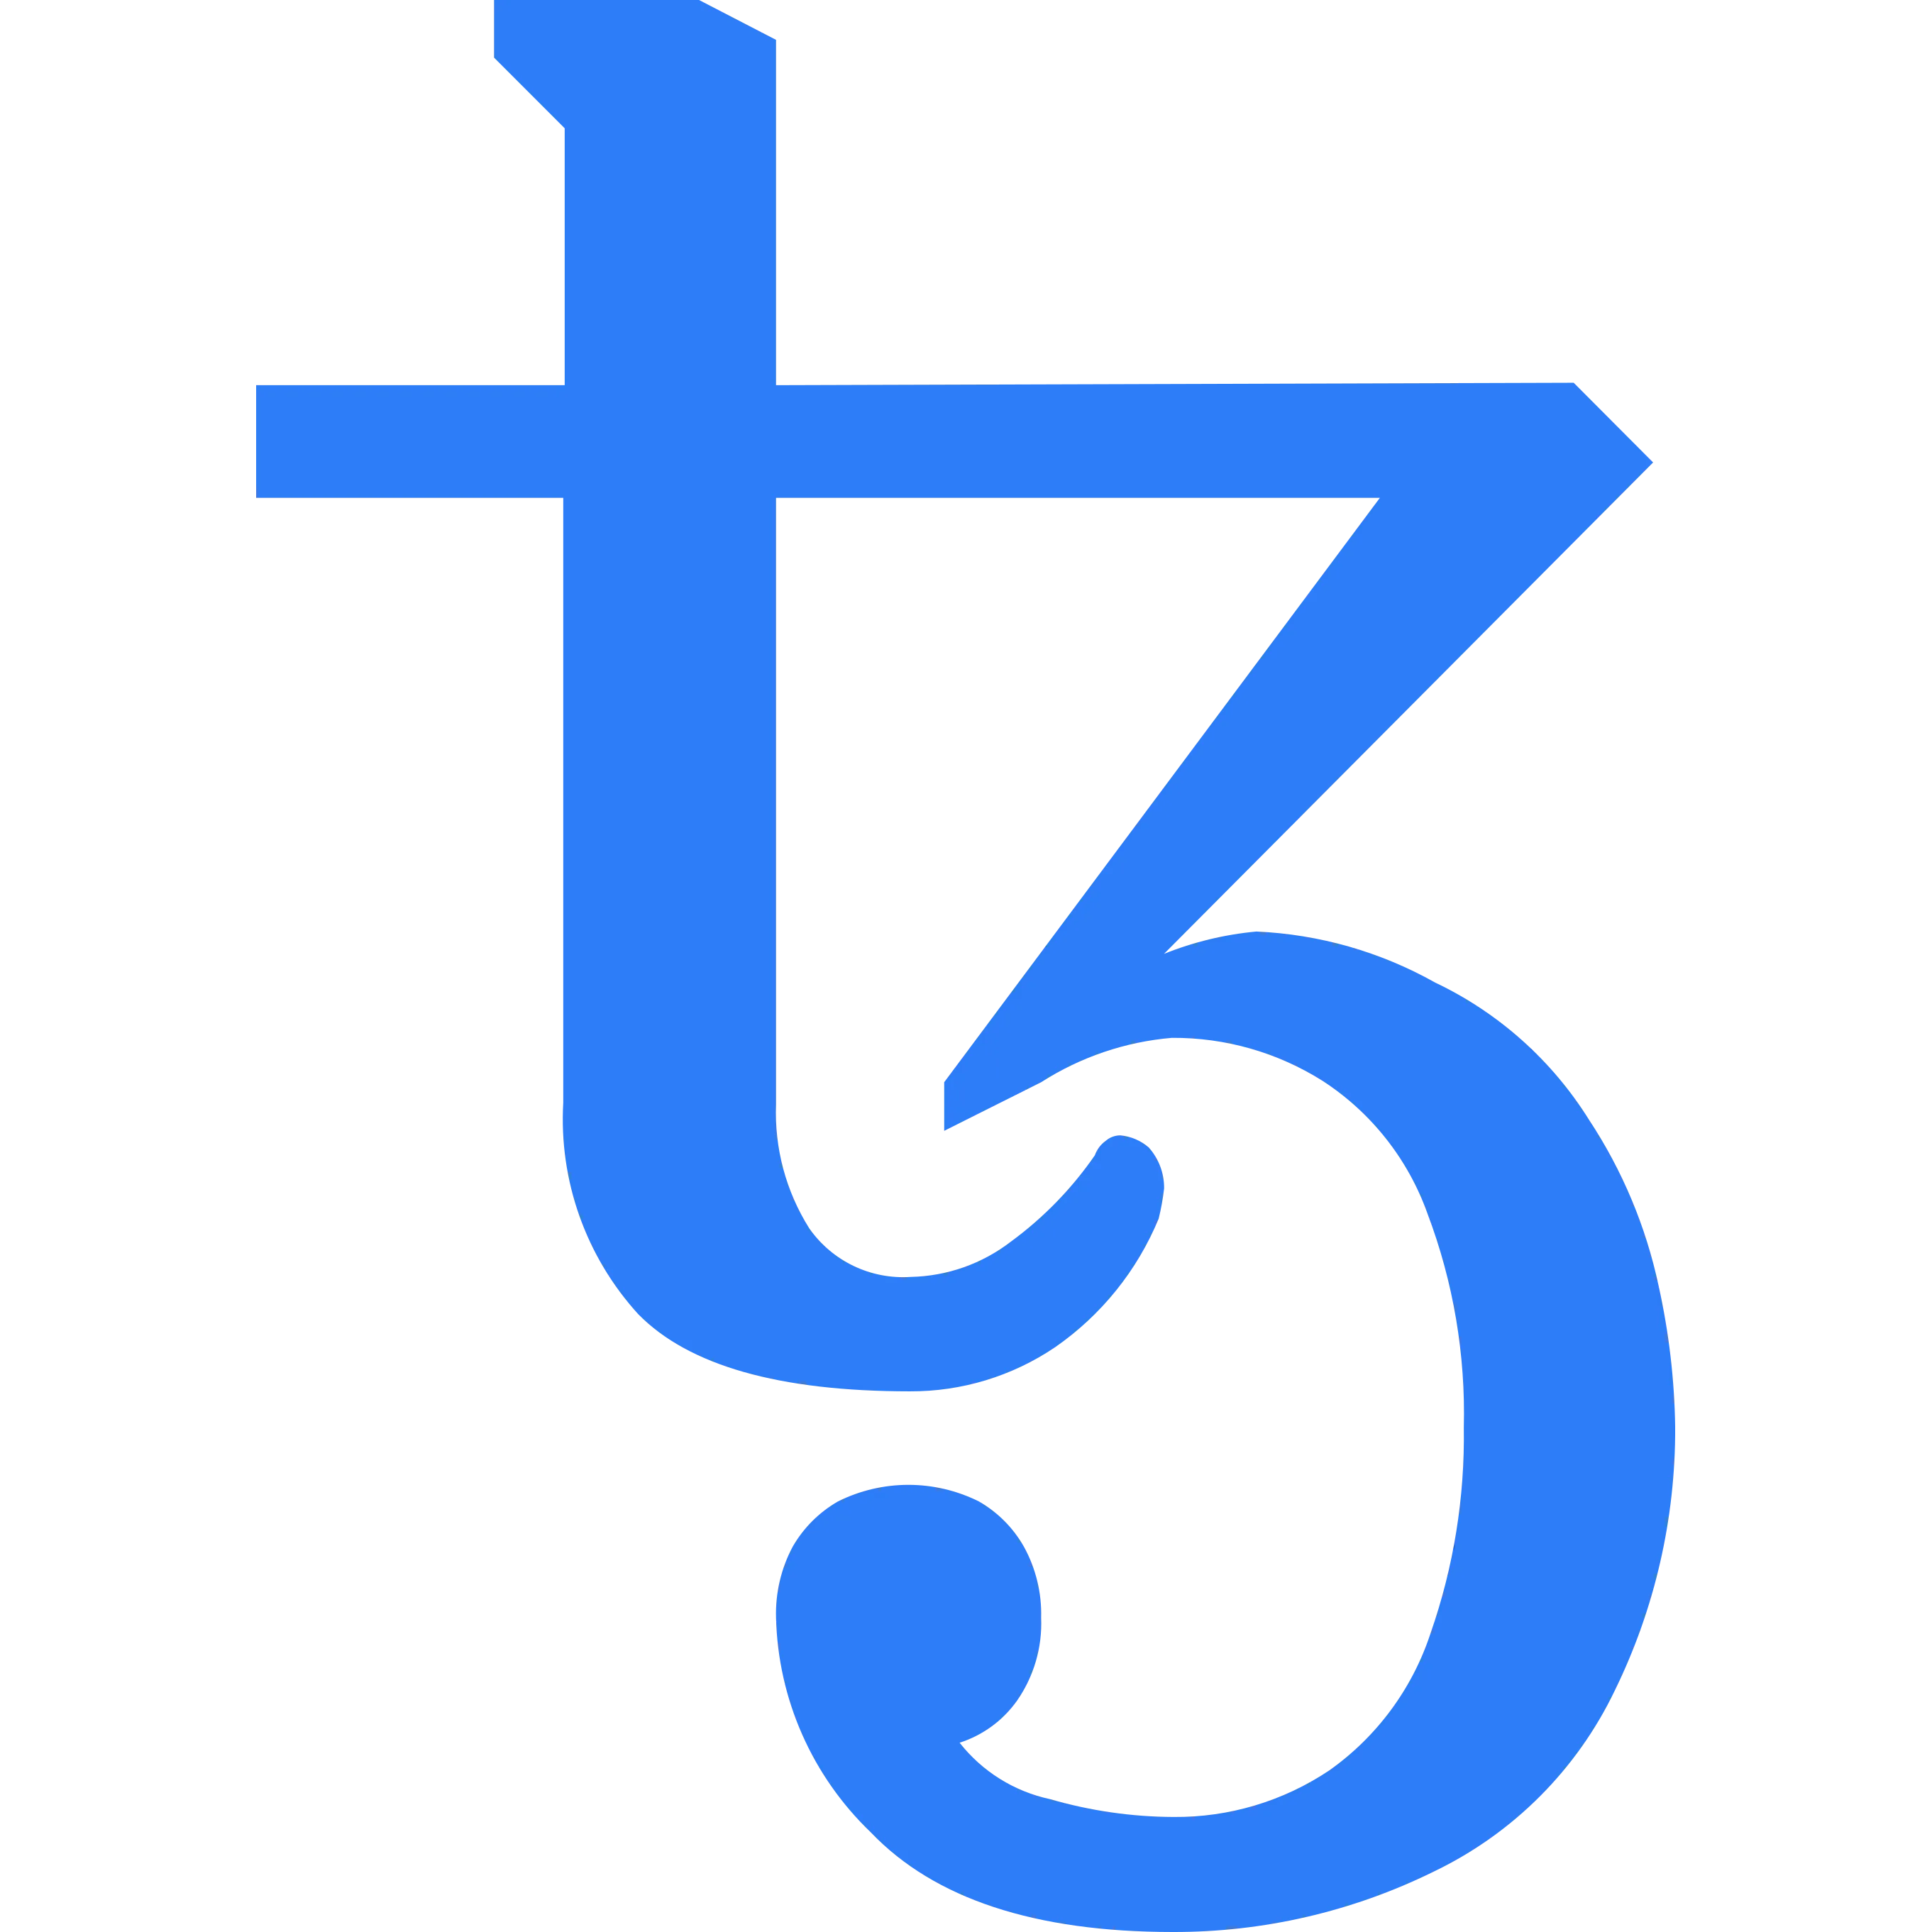 Tezos logo in png format